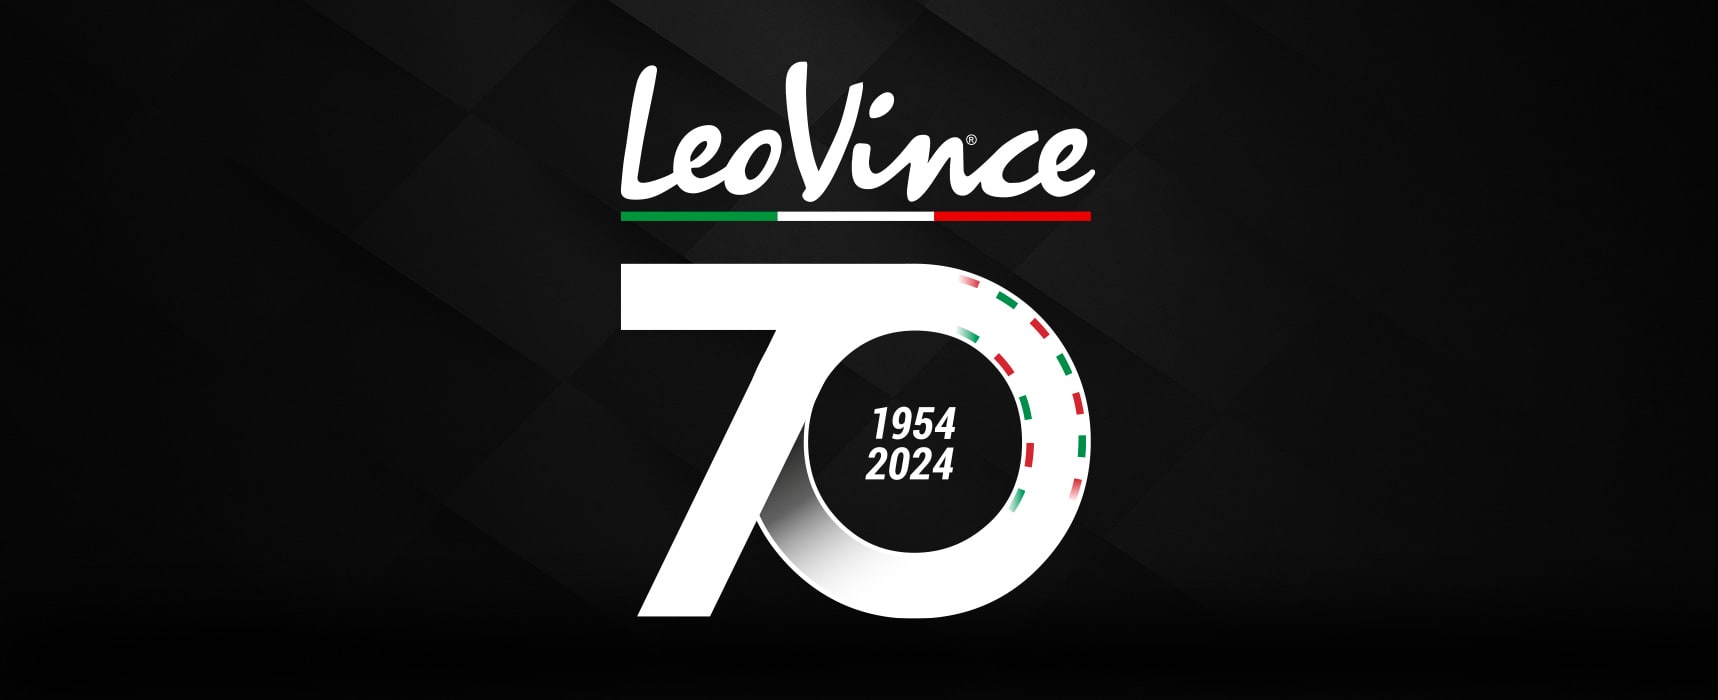 70 years of LeoVince